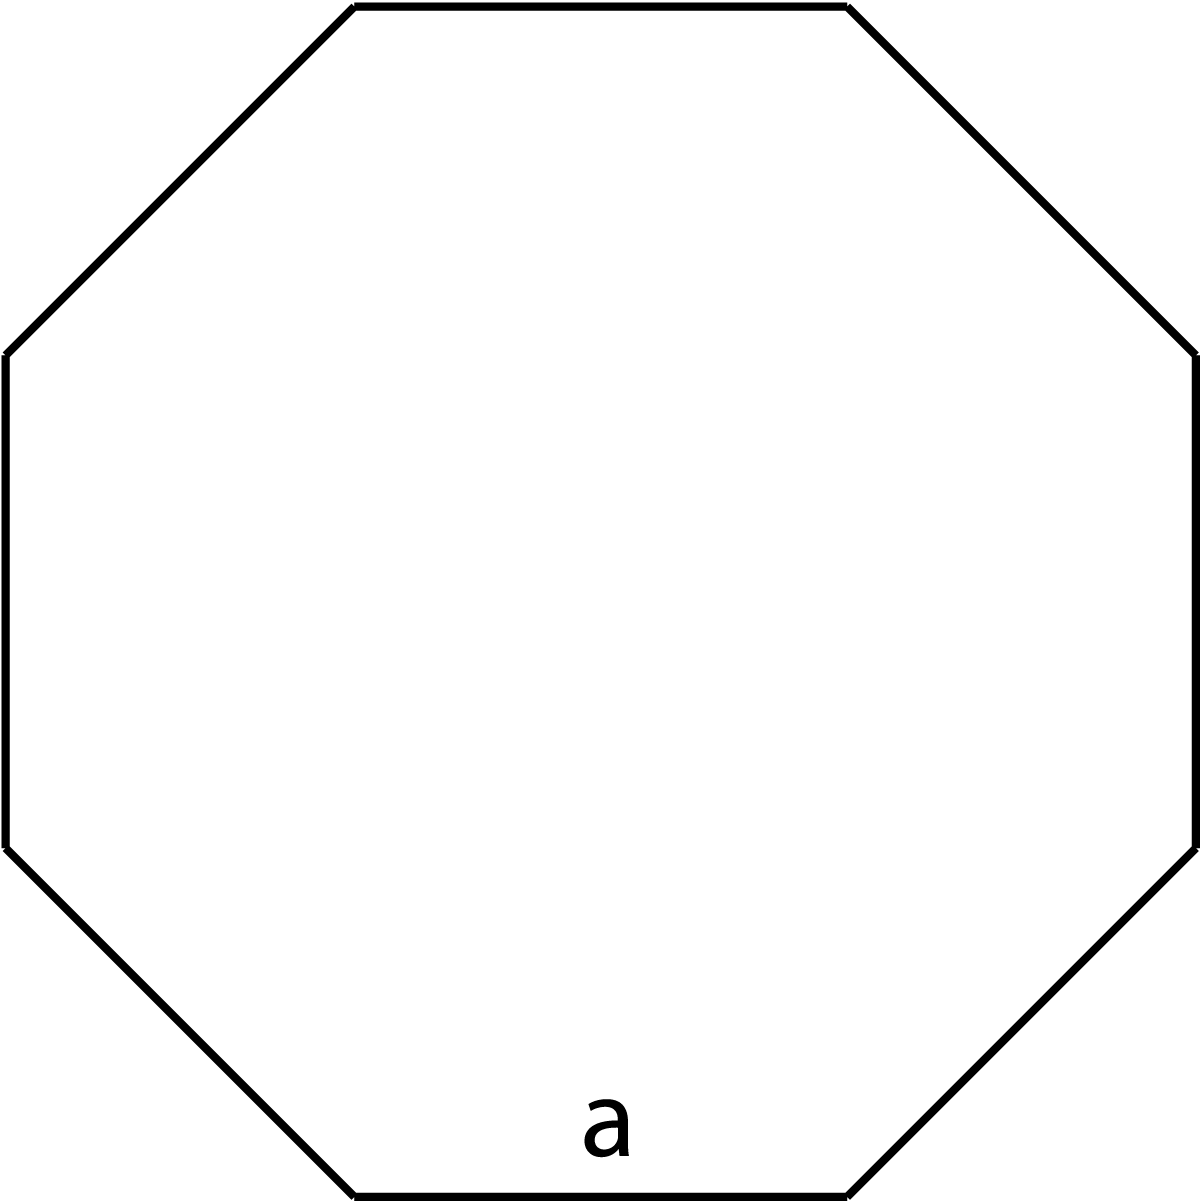 Diagram of a regular polygon showing a = edge length